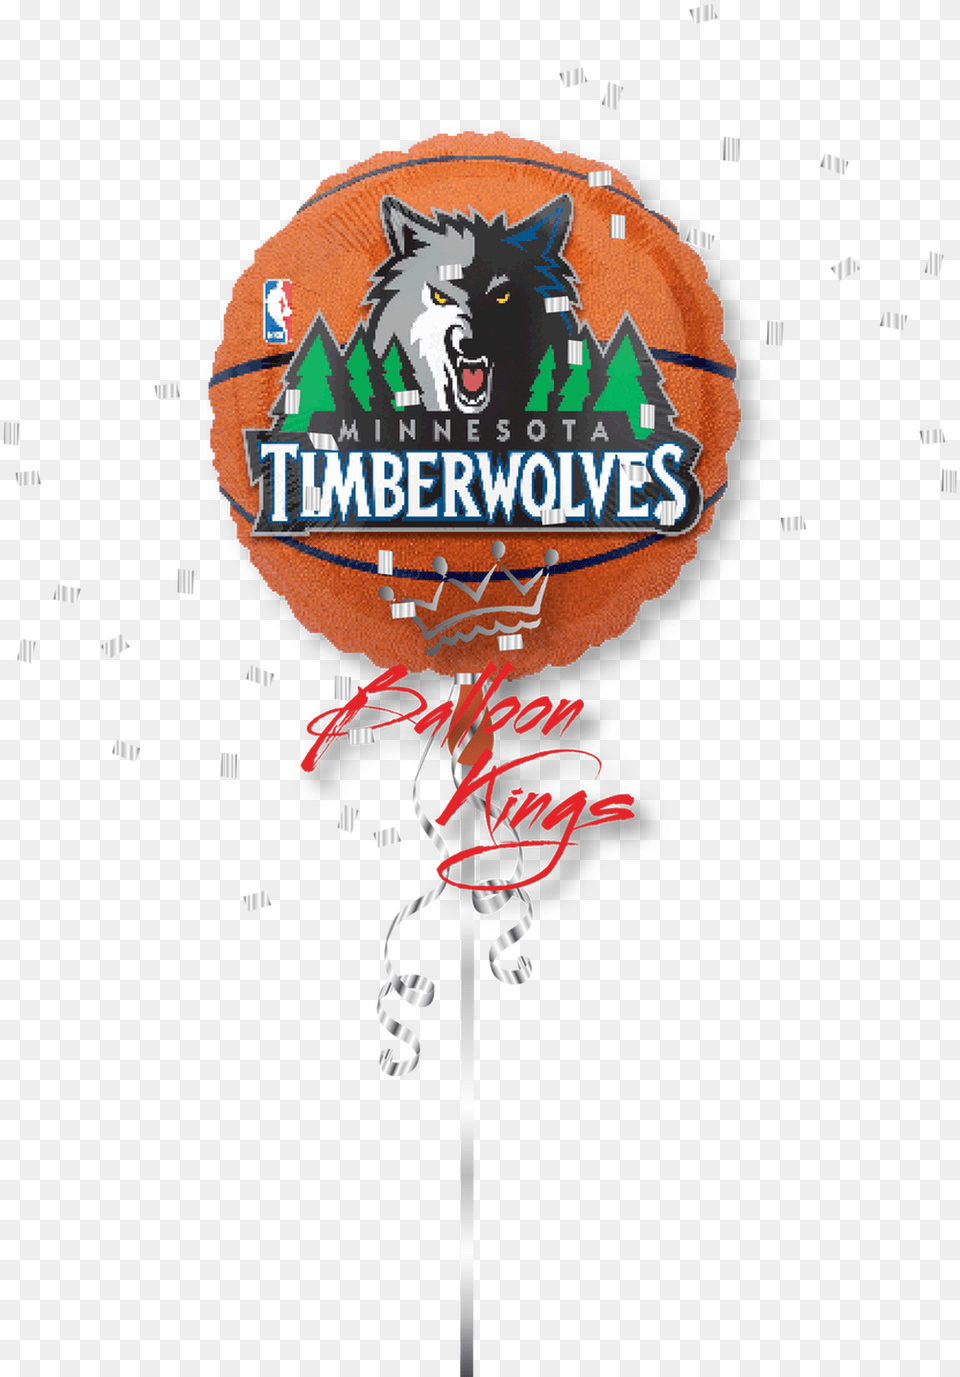 Minnesota Timberwolves Golden State Warriors Balloons, Food, Sweets, Advertisement Free Transparent Png